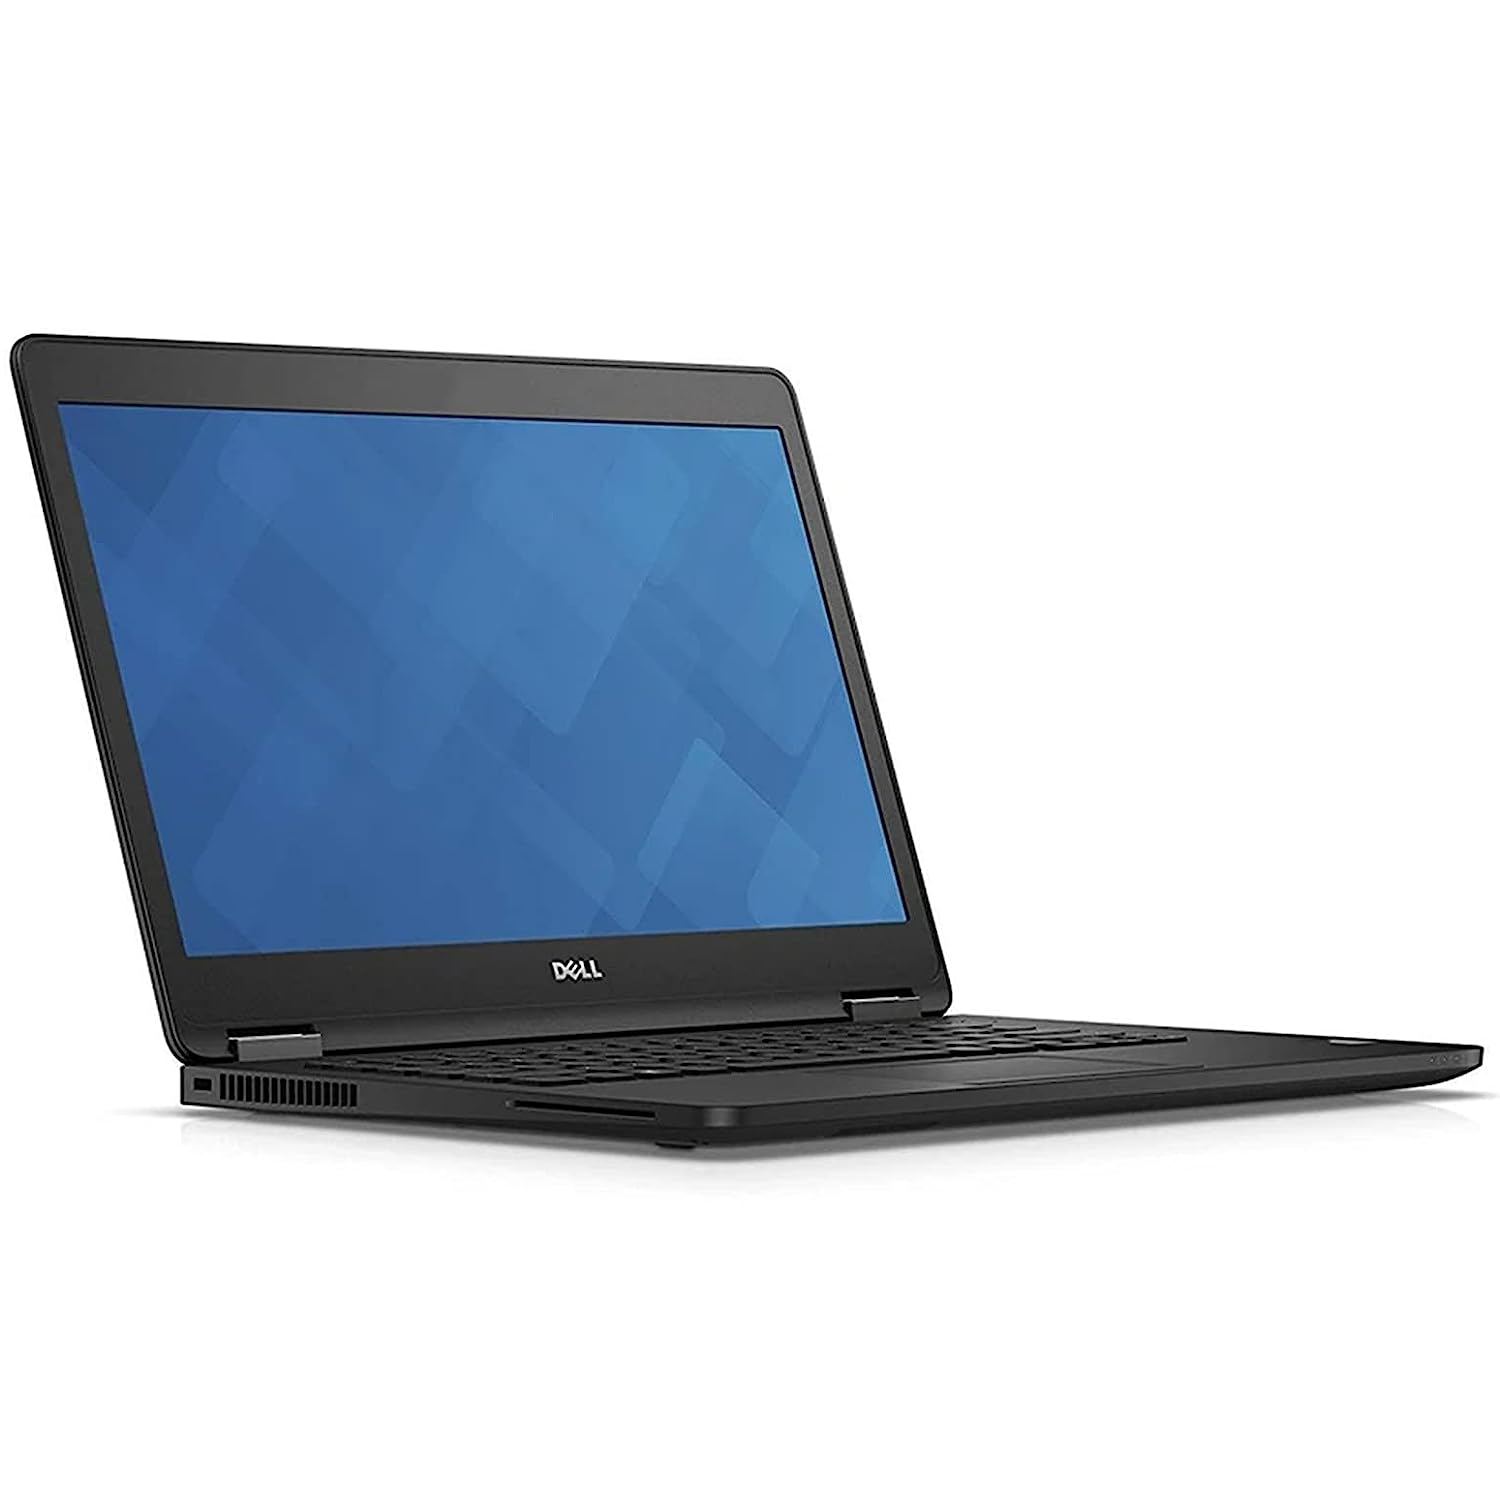 خرید لپتاب Dell Stock i5 8GB 7470 laptop